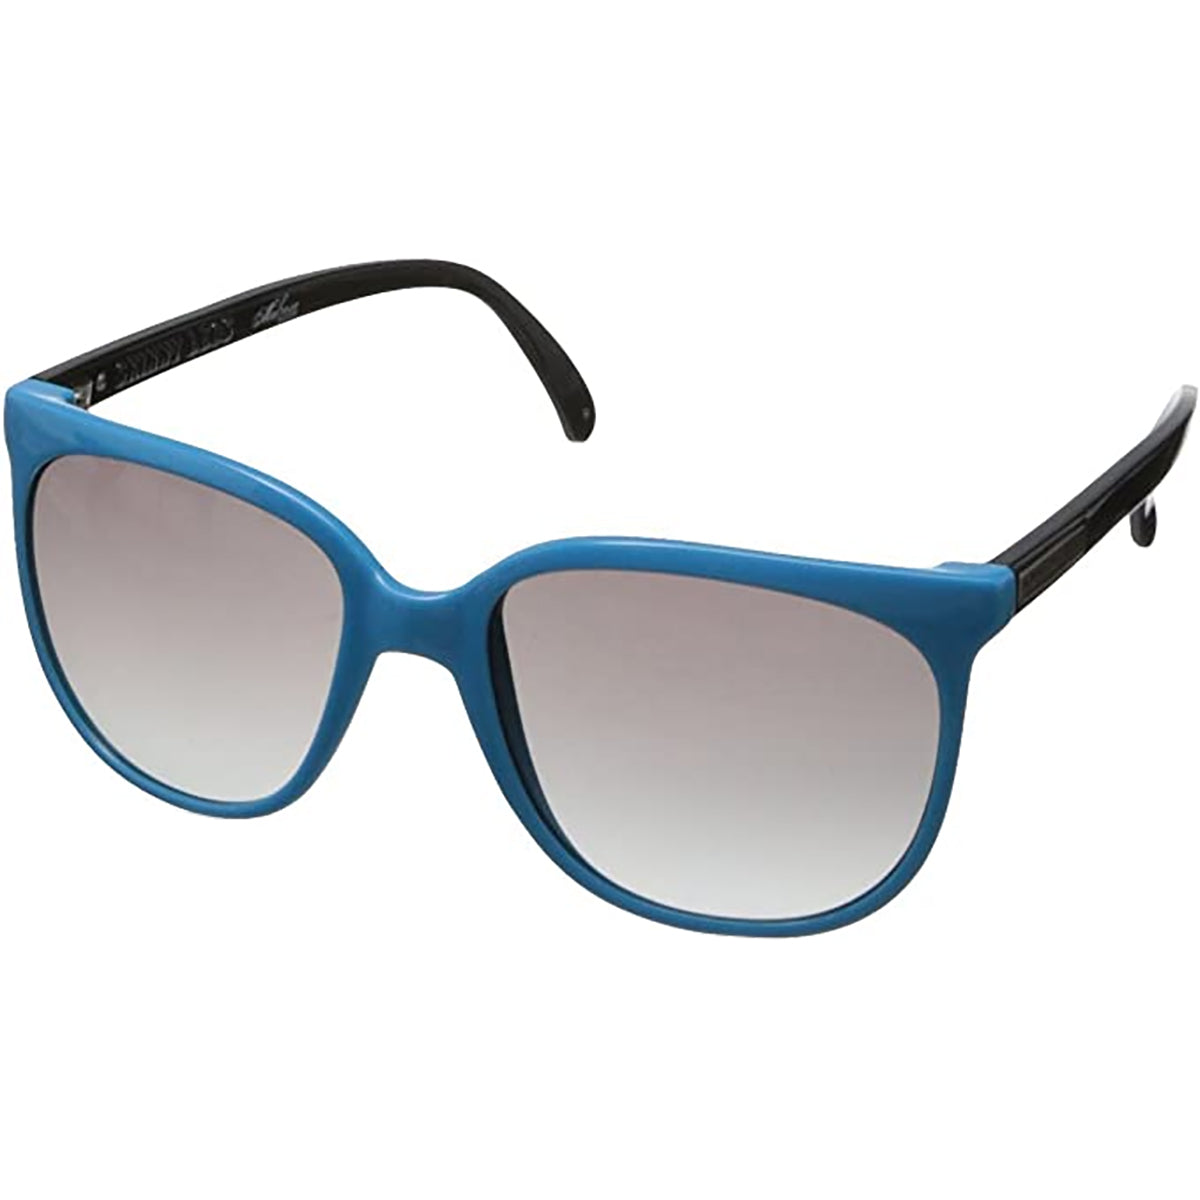 Hoven Skinny Legs Women's Lifestyle Sunglasses-47-2507-1